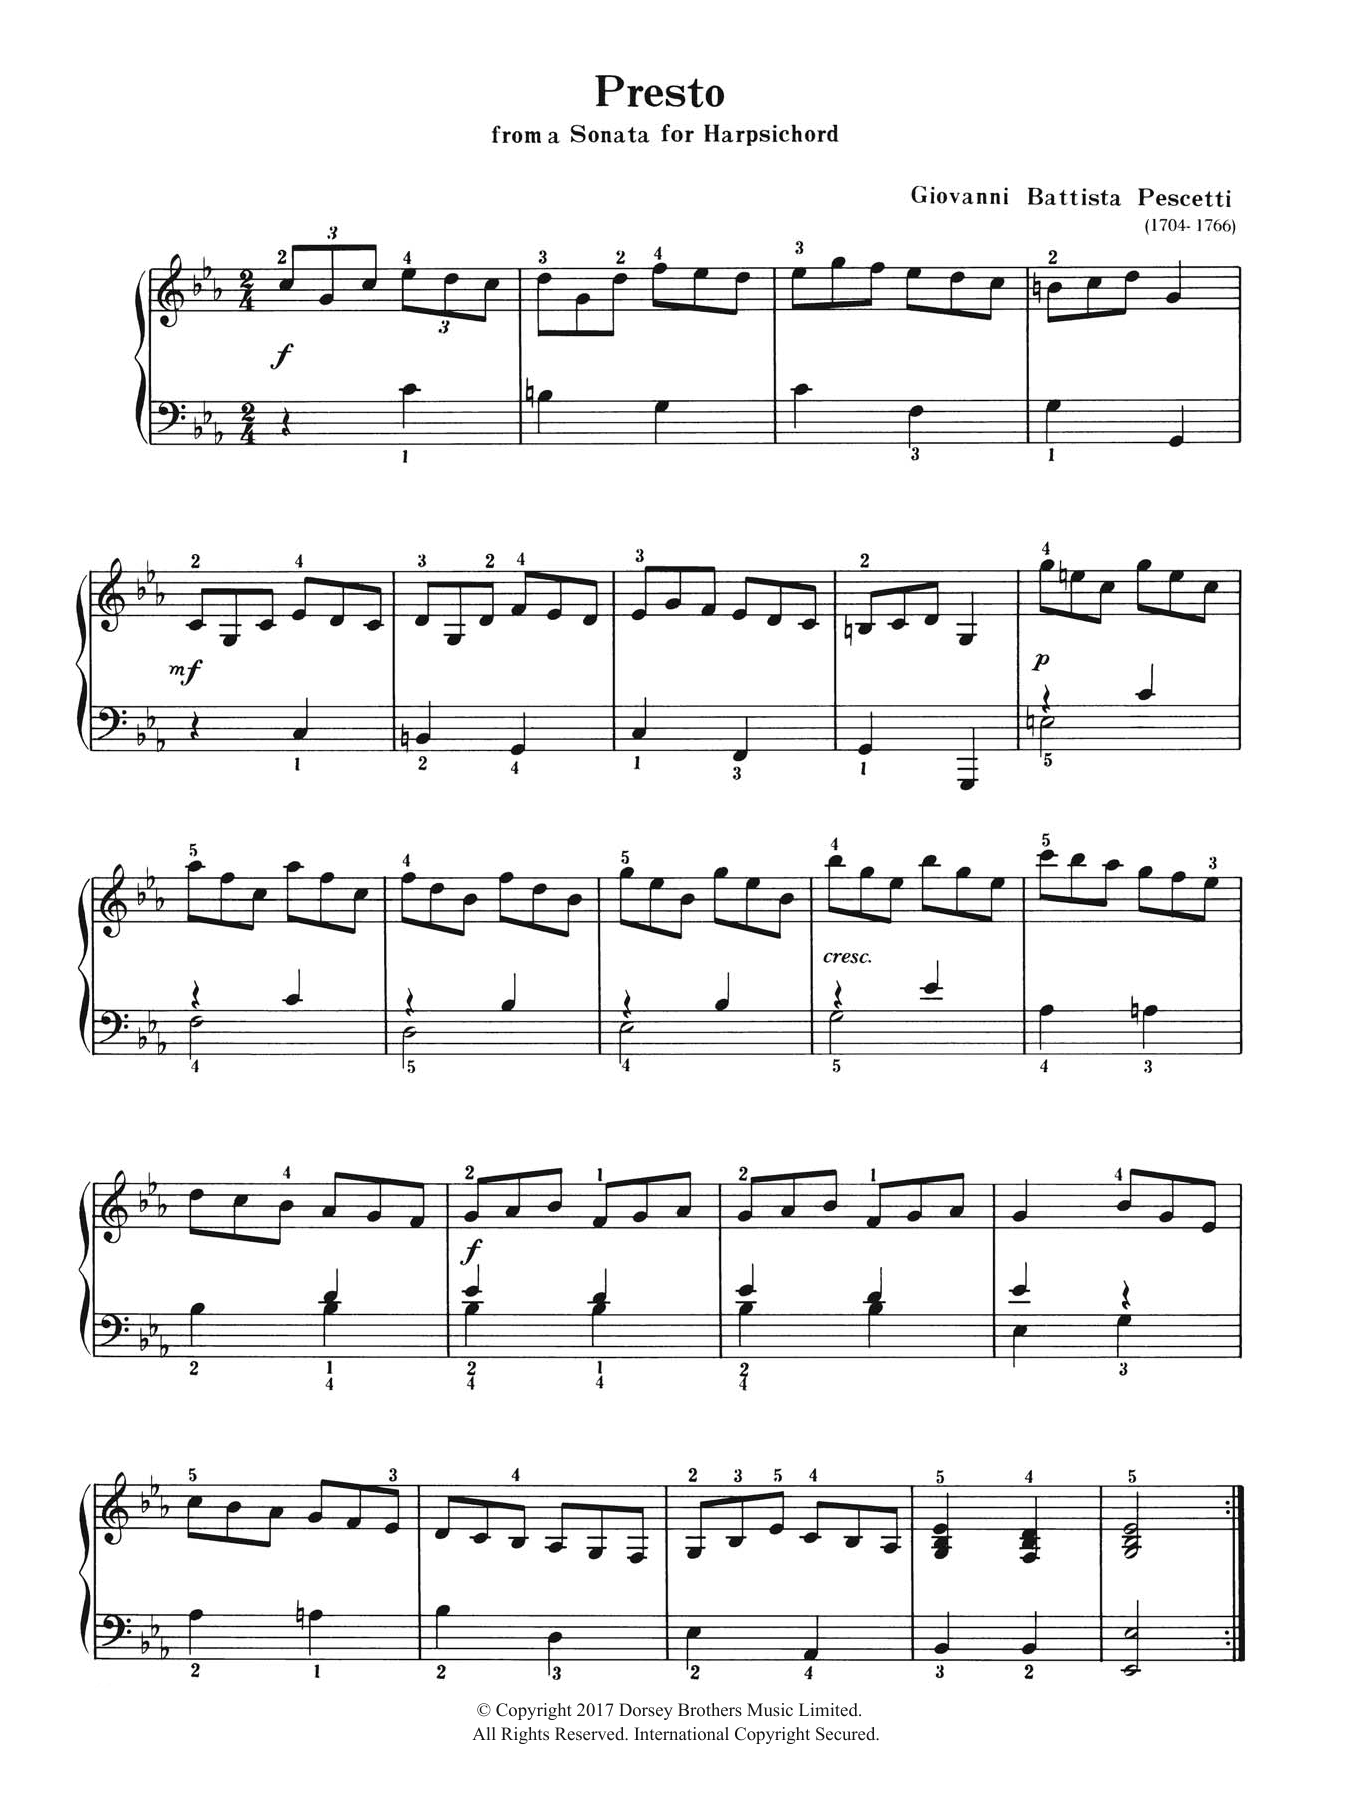 Download Giovanni Pescetti Presto Sheet Music and learn how to play Piano PDF digital score in minutes